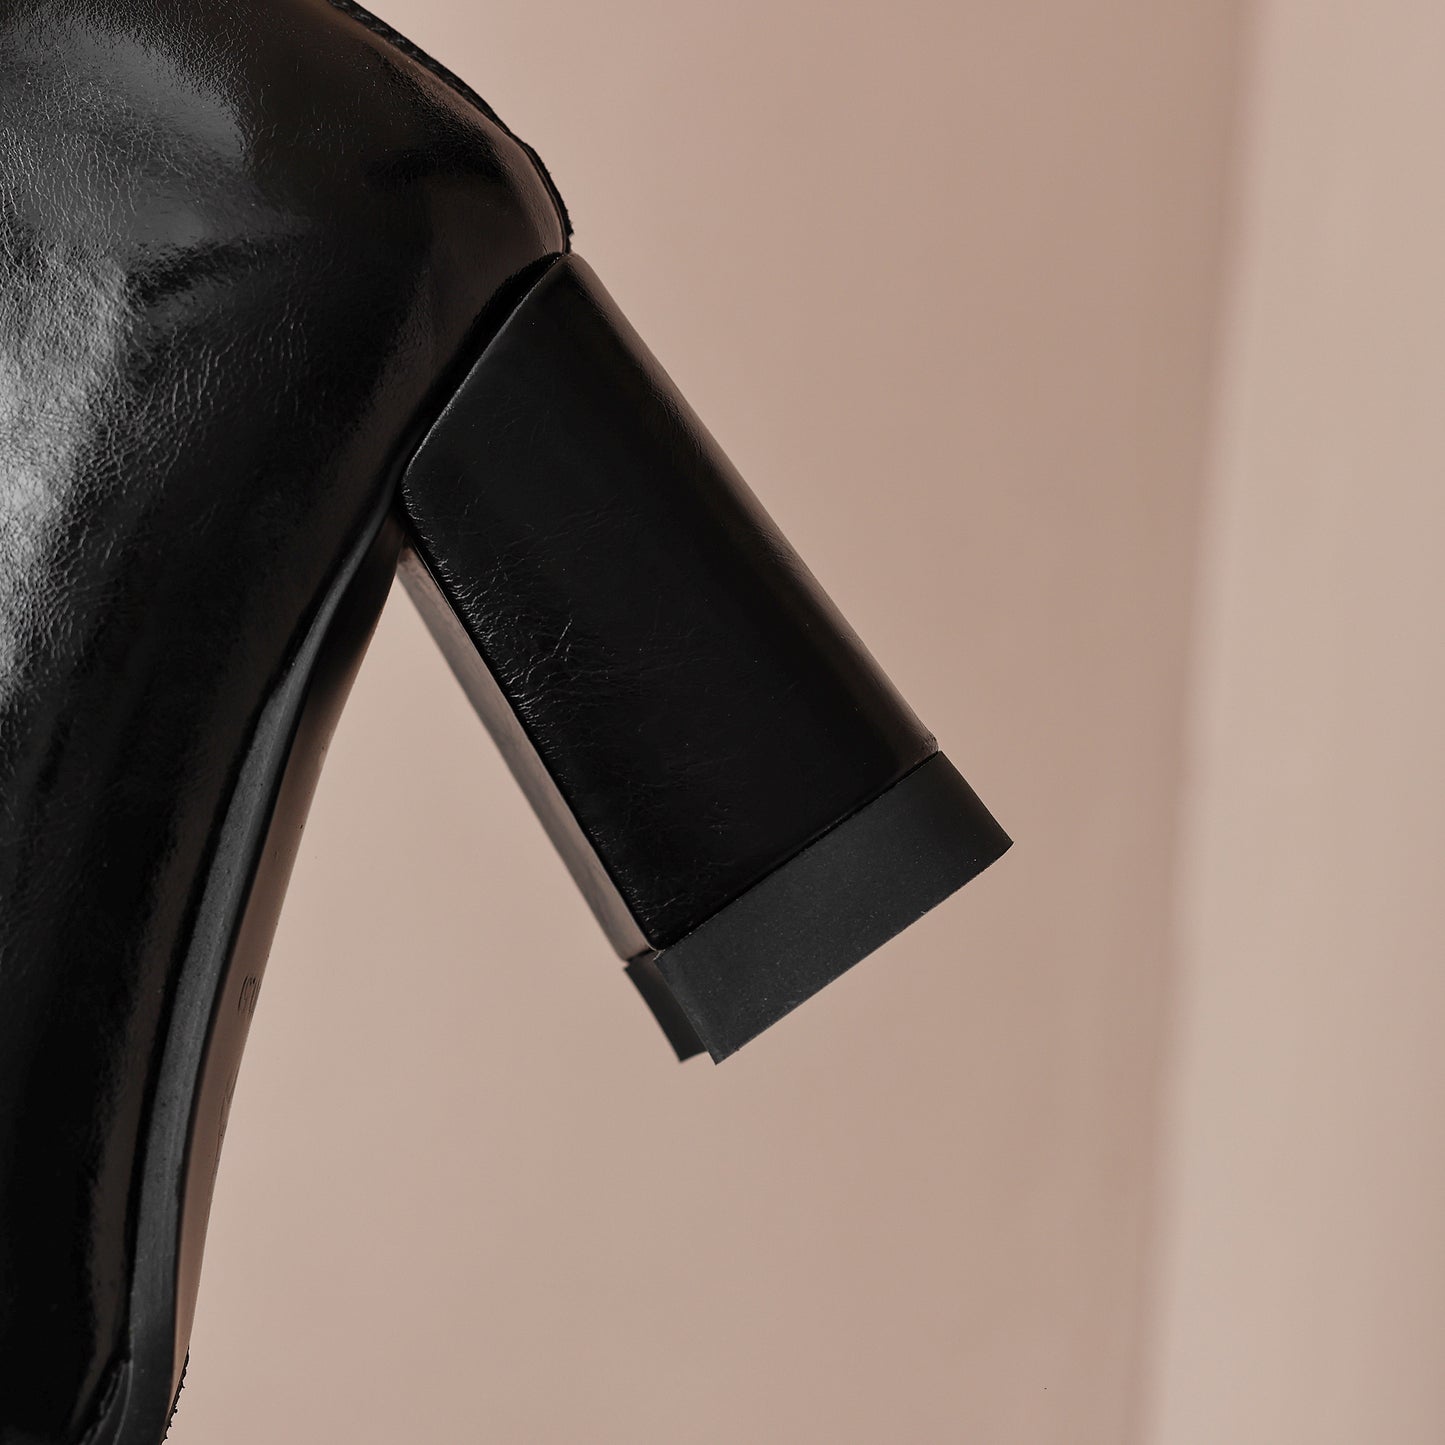 TinaCus Handmade Women's Genuine Leather Chunky Heel  Zip Up Knee High Boots